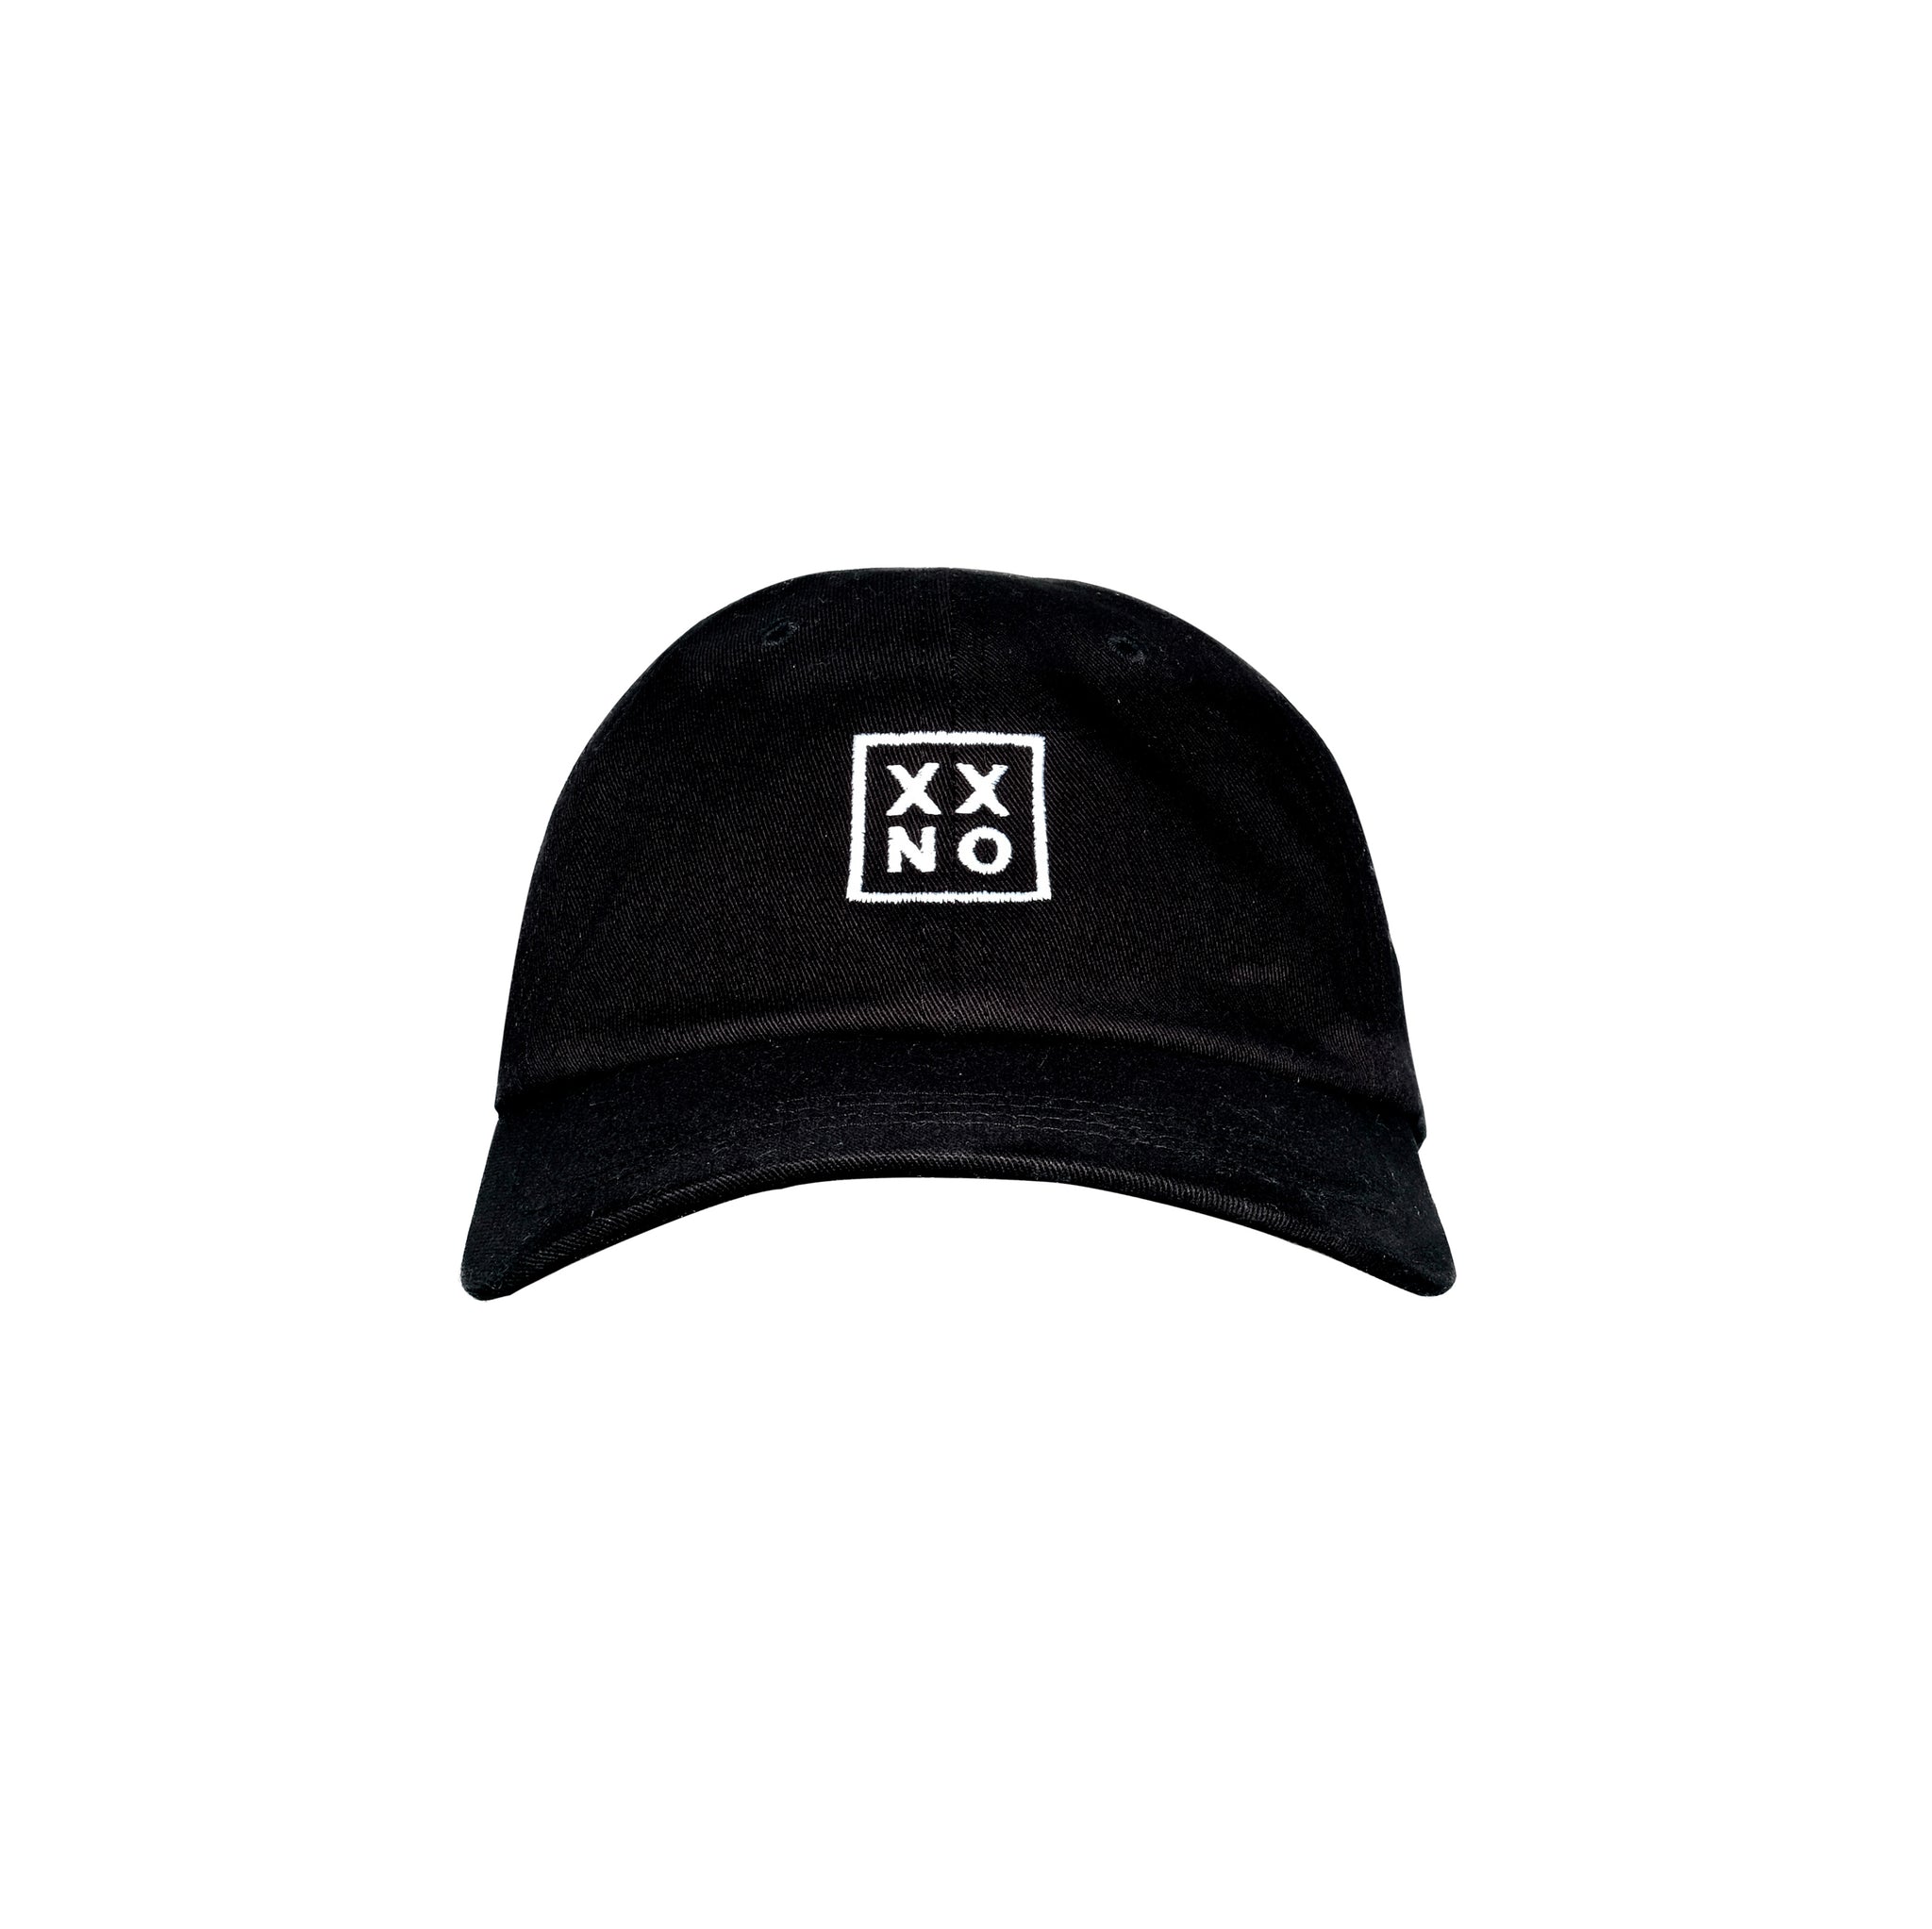 Dad Hat | XXNO - Black